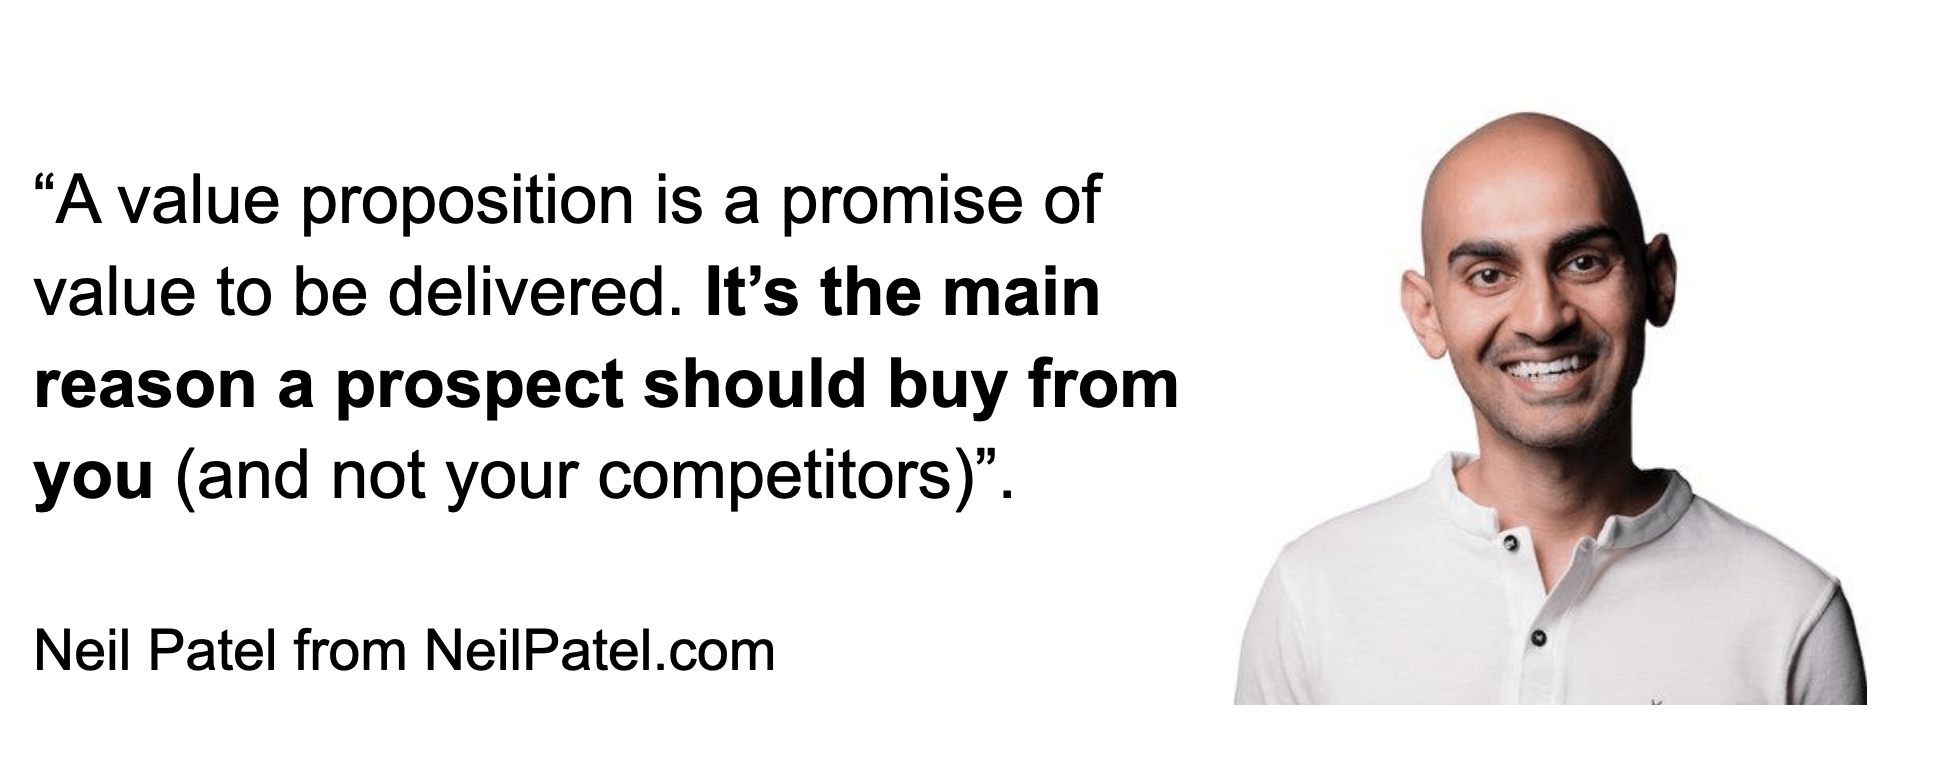 Neil Patel  Sub-headline and value proposition